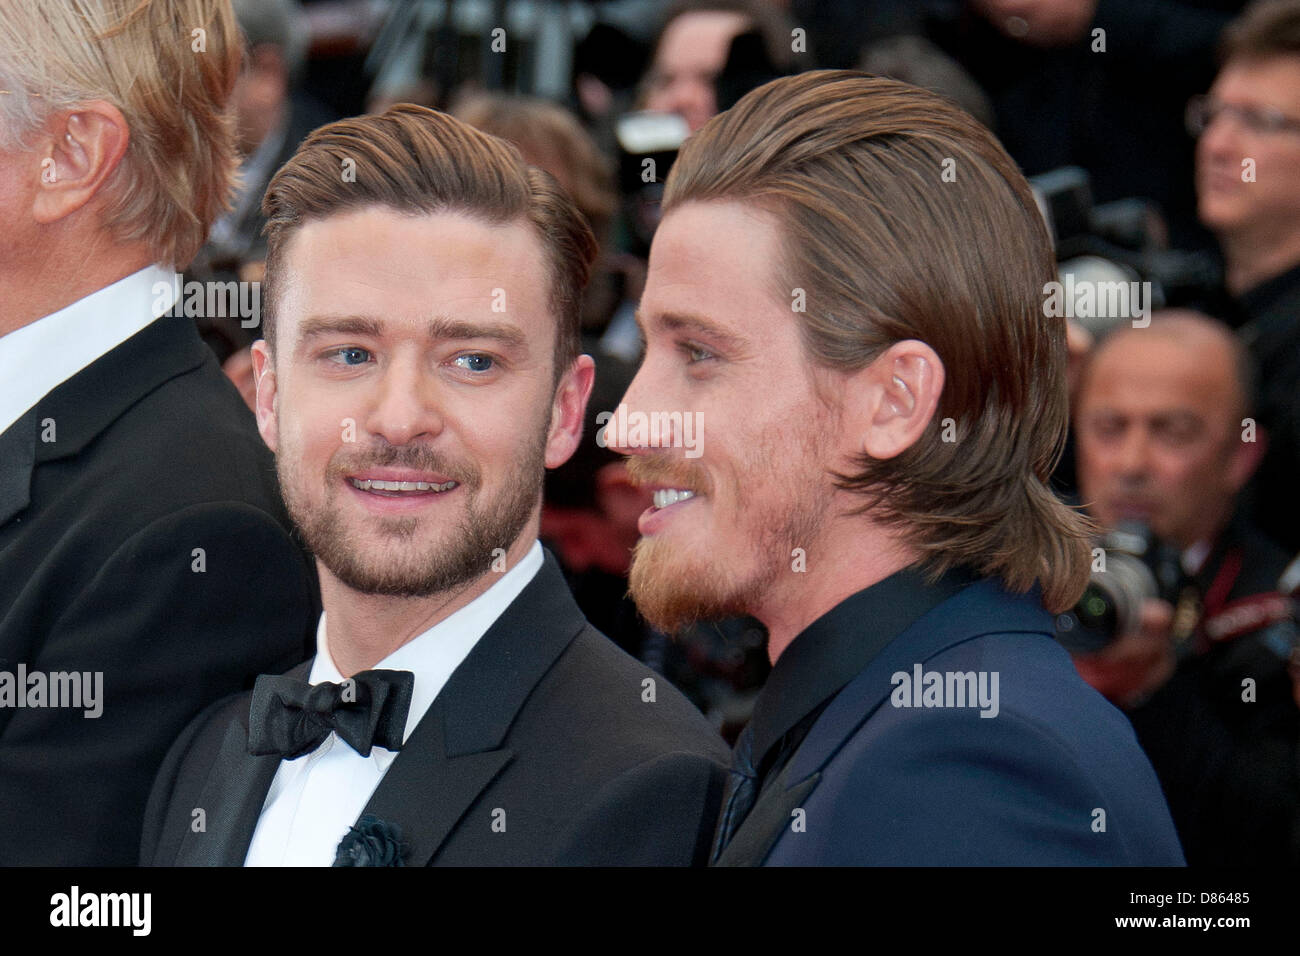 Justin Timberlake & Jessica Biel: 'Inside Llewyn Davis' Cannes